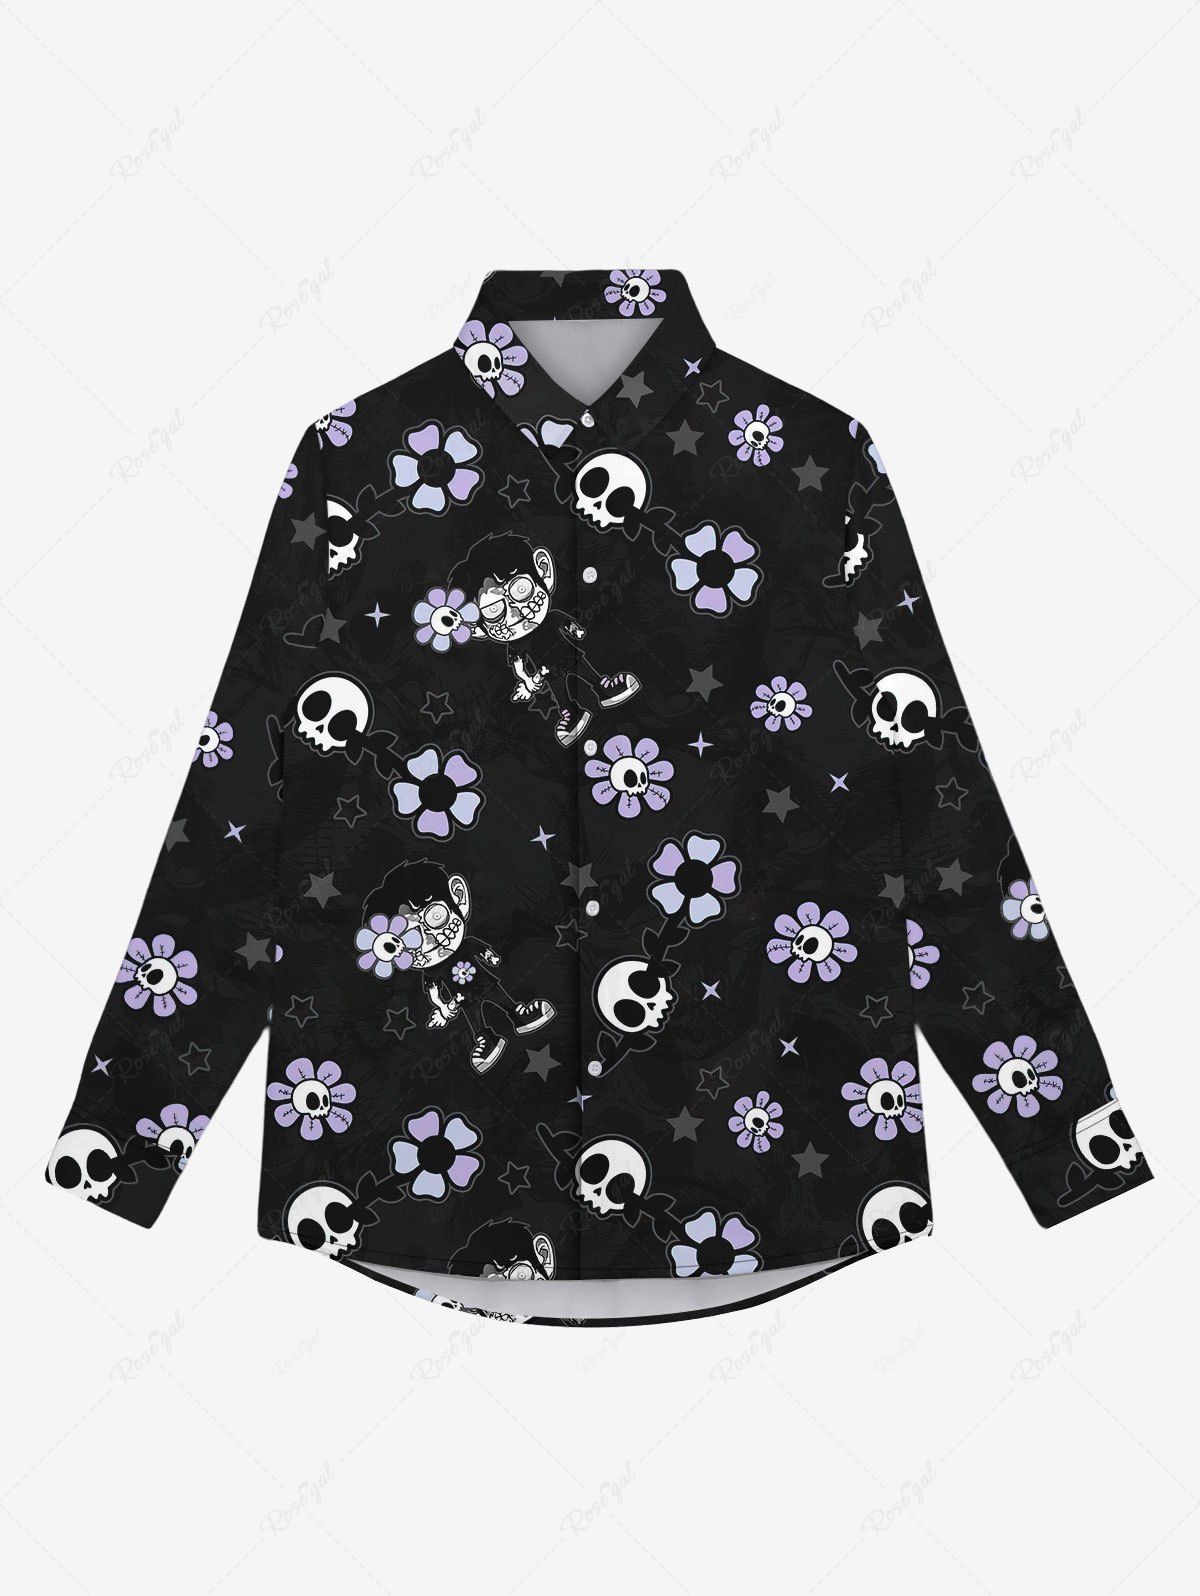 Fancy Gothic Turn-down Collar Skull Sunflower Star Cartoon Boy Print Buttons Shirt For Men  